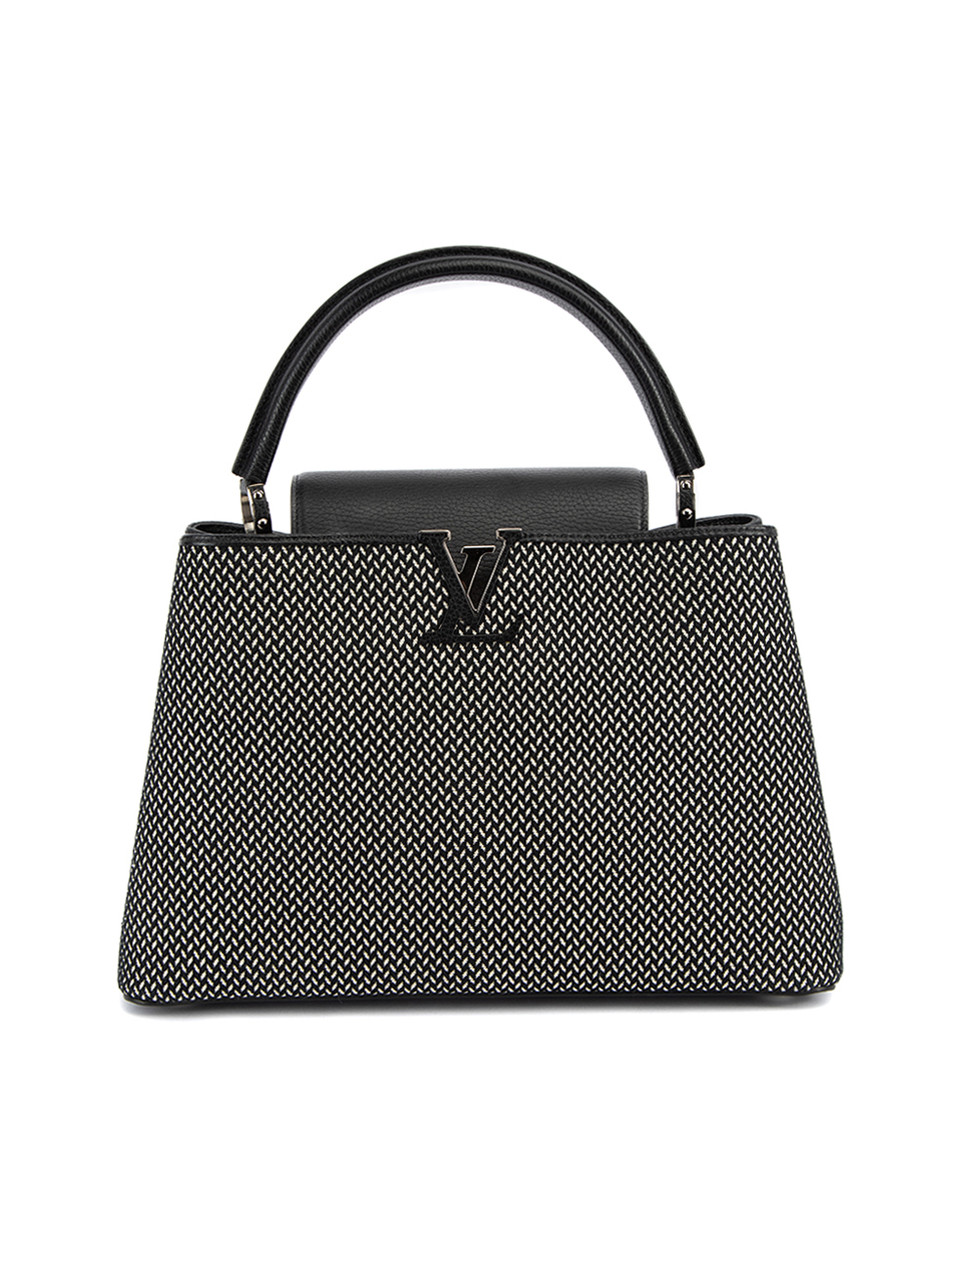 Louis Vuitton - Capucines Mini Bag - Black - GHW - Pre-Loved